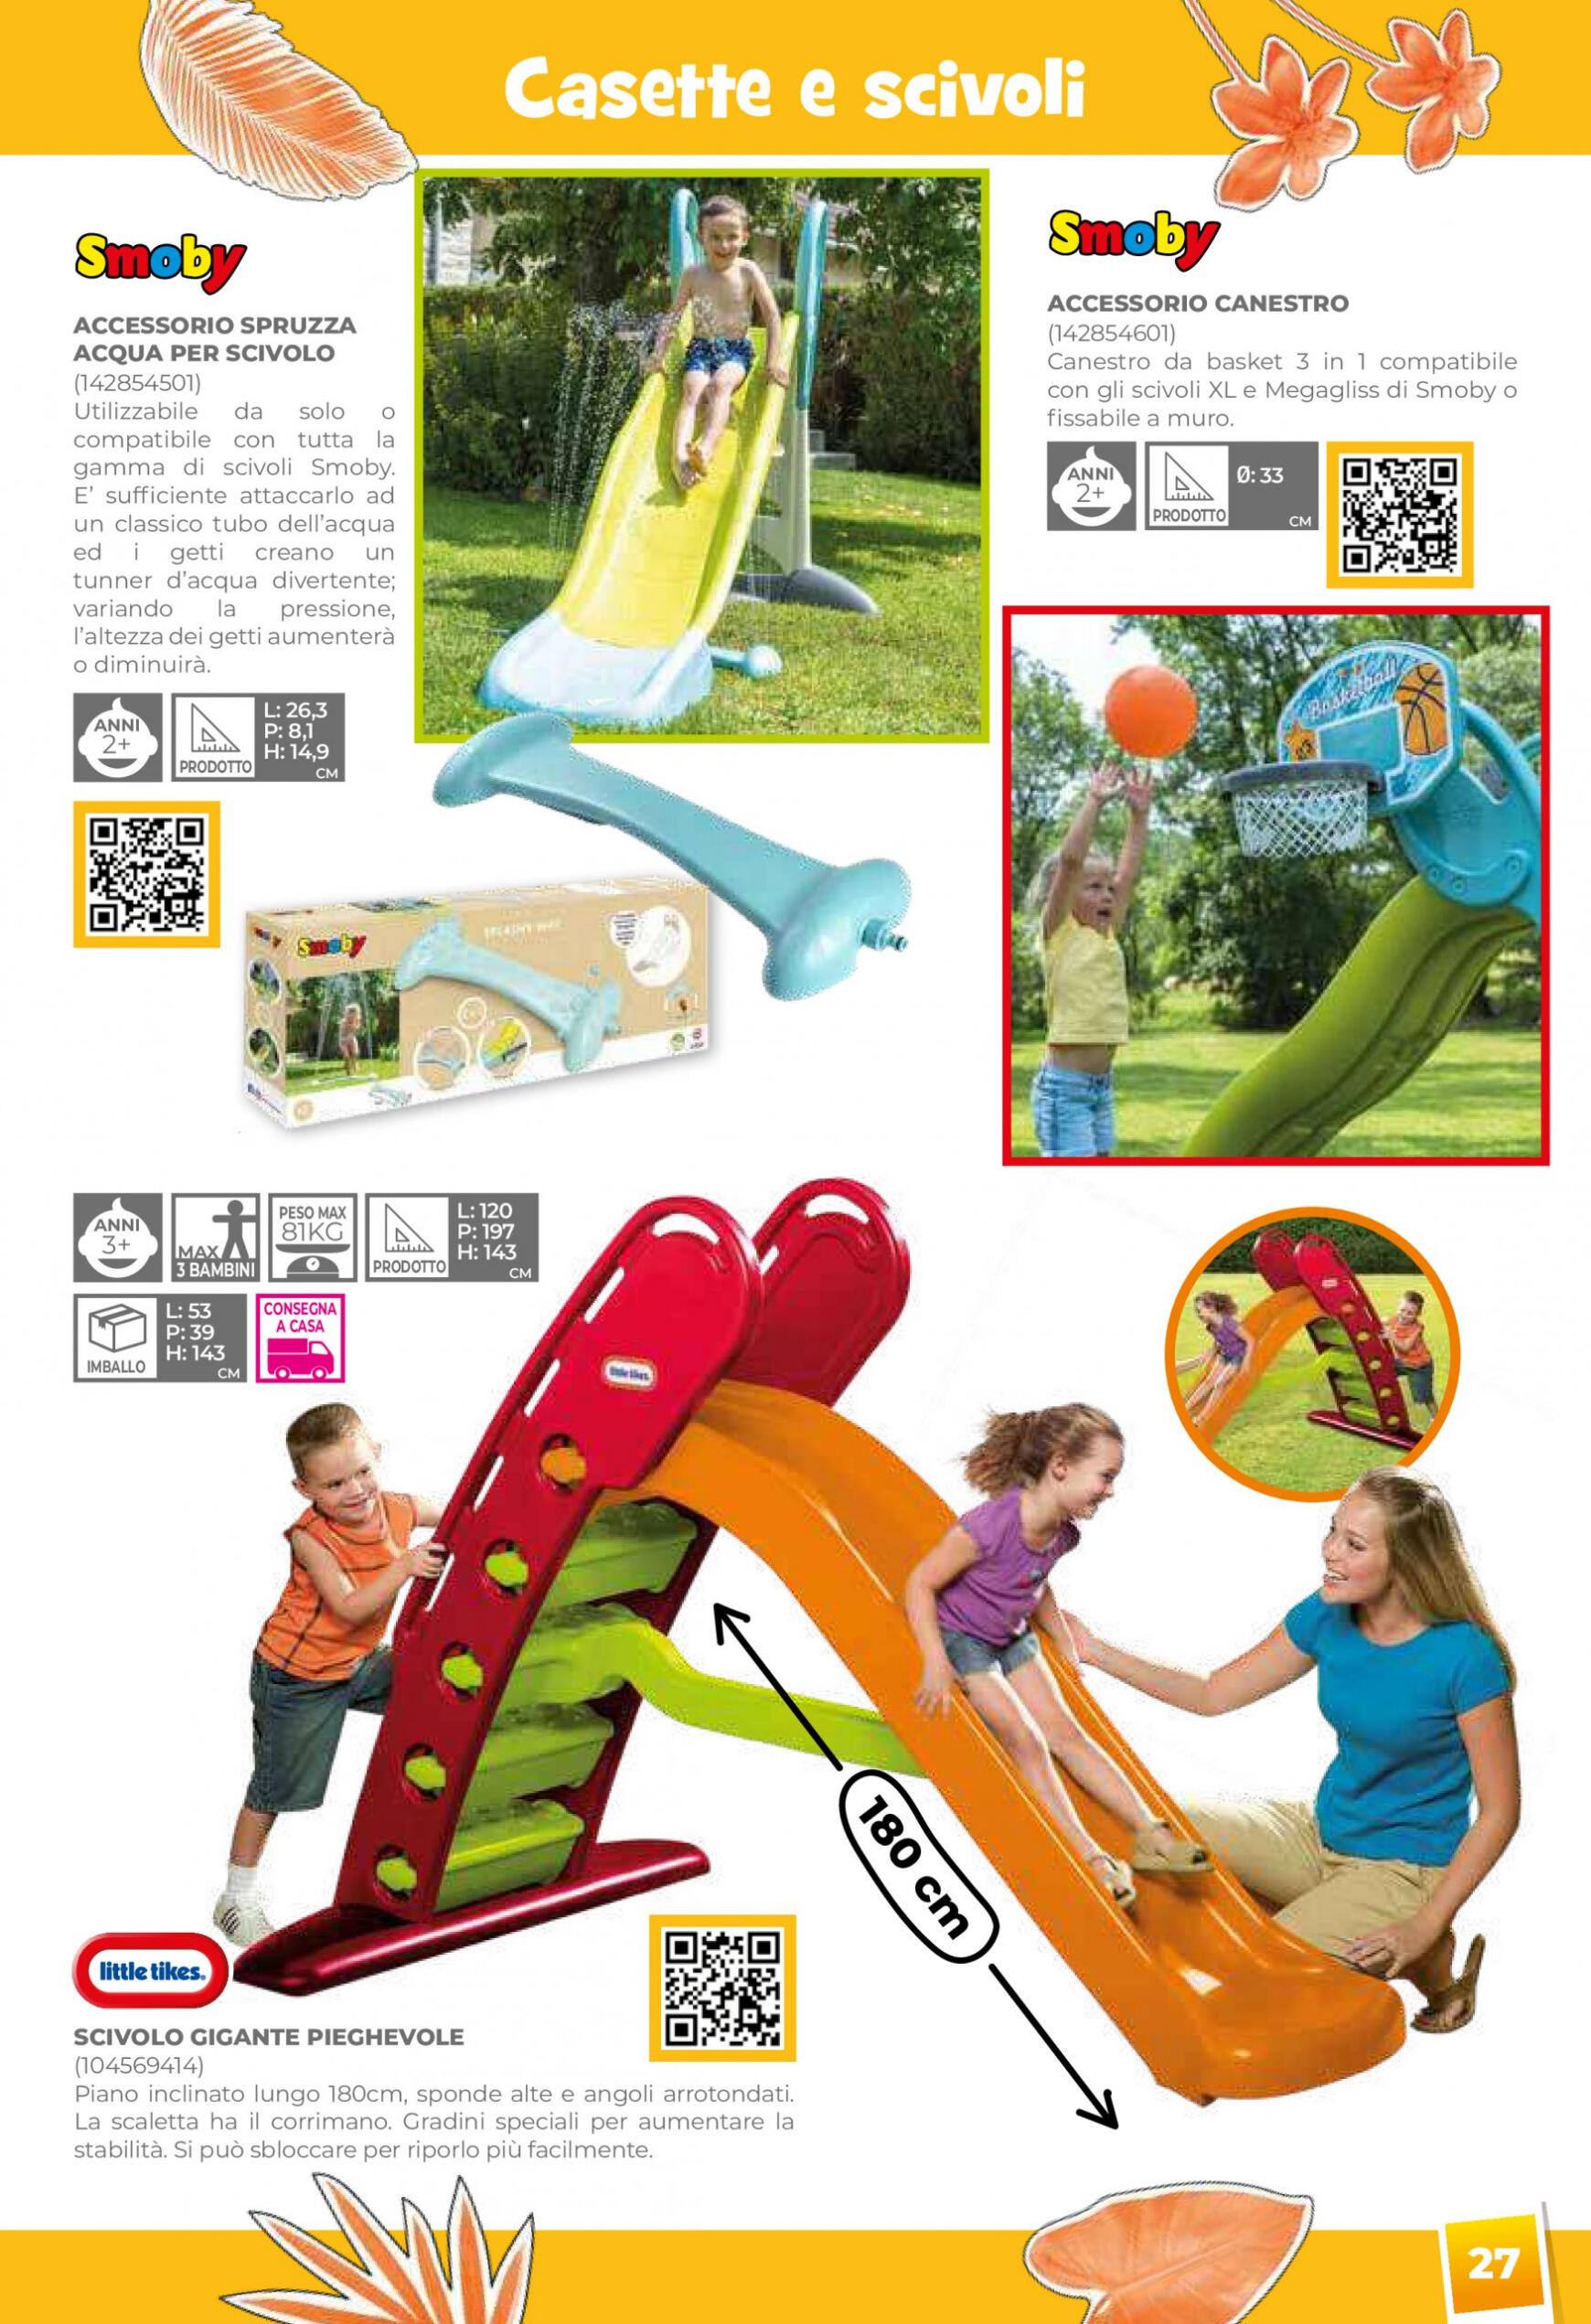 toys-center - Nuovo volantino Toys Center 01.05. - 31.12. - page: 29